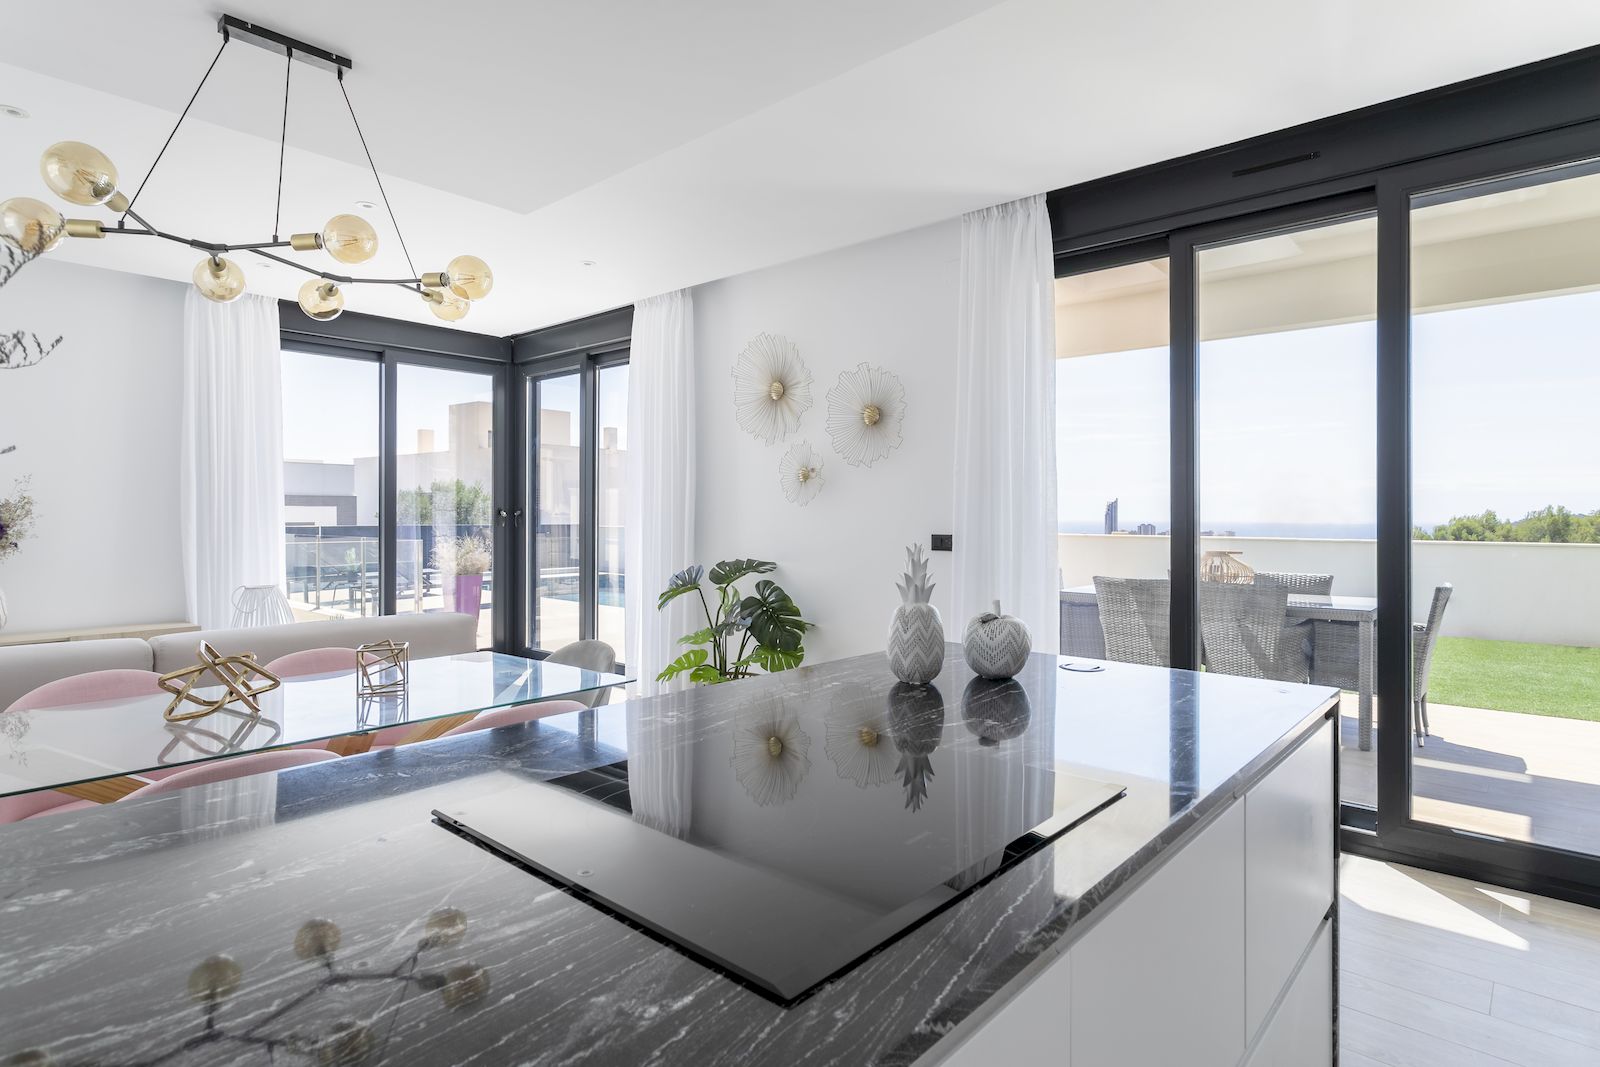 New Work Villa de style moderne à vendre à Benidorm - Costa Blanca